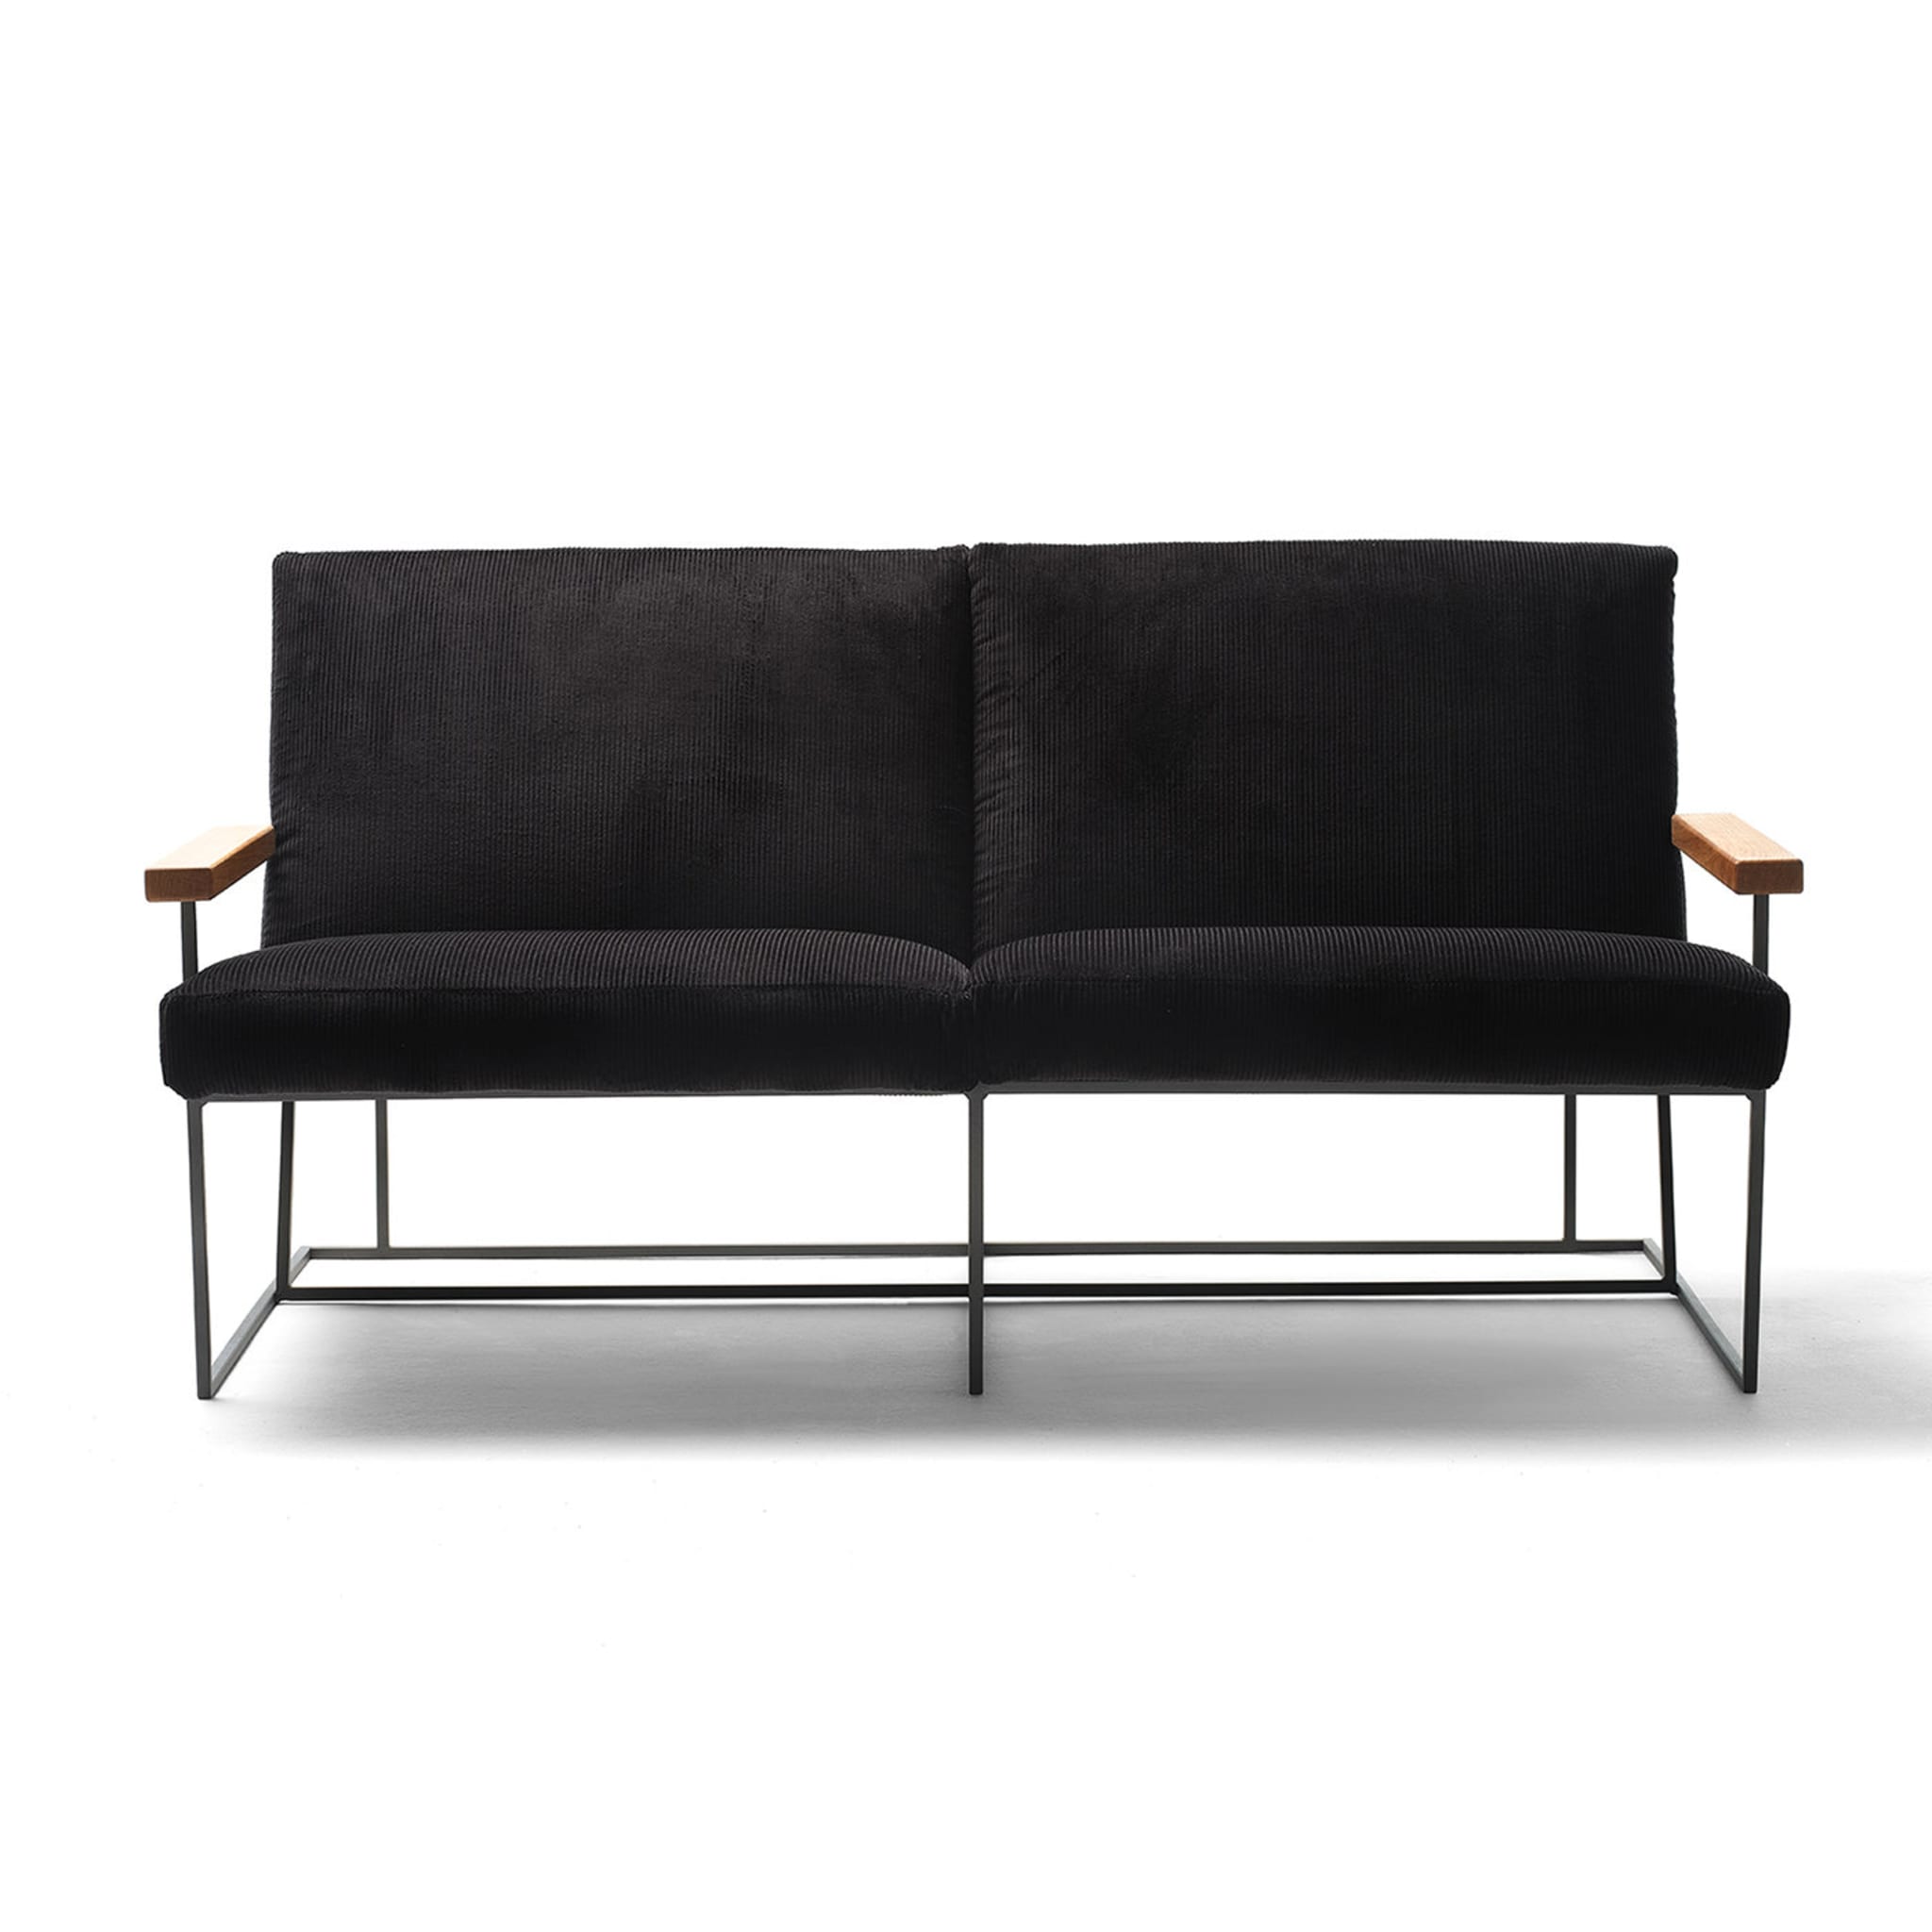 Gotham Black 2- Seater Sofa by Federico Carandini - Alternative view 1